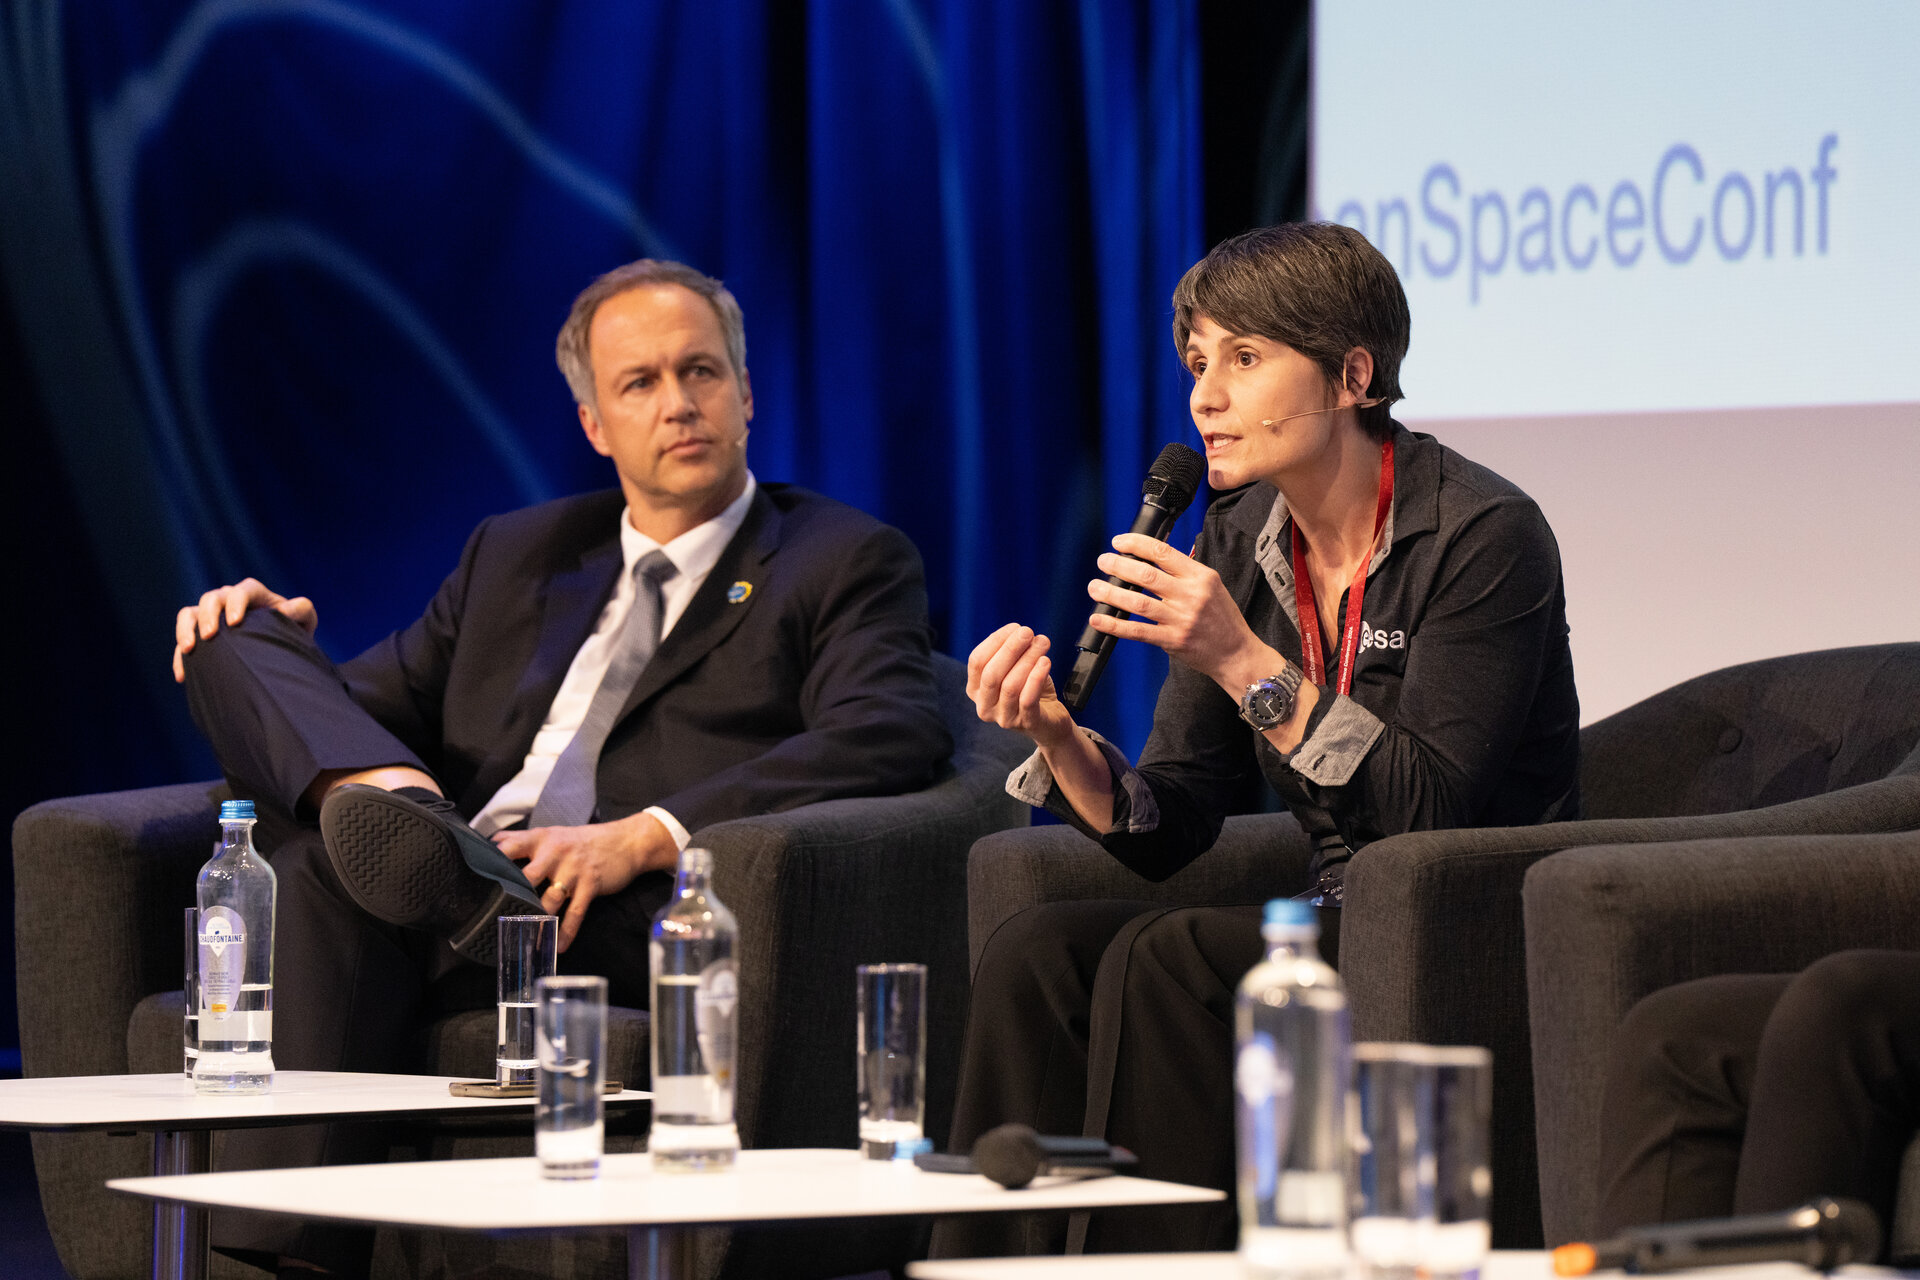 Daniel Neuenschwander and Samantha Cristoforetti at the 16th European Space Conference